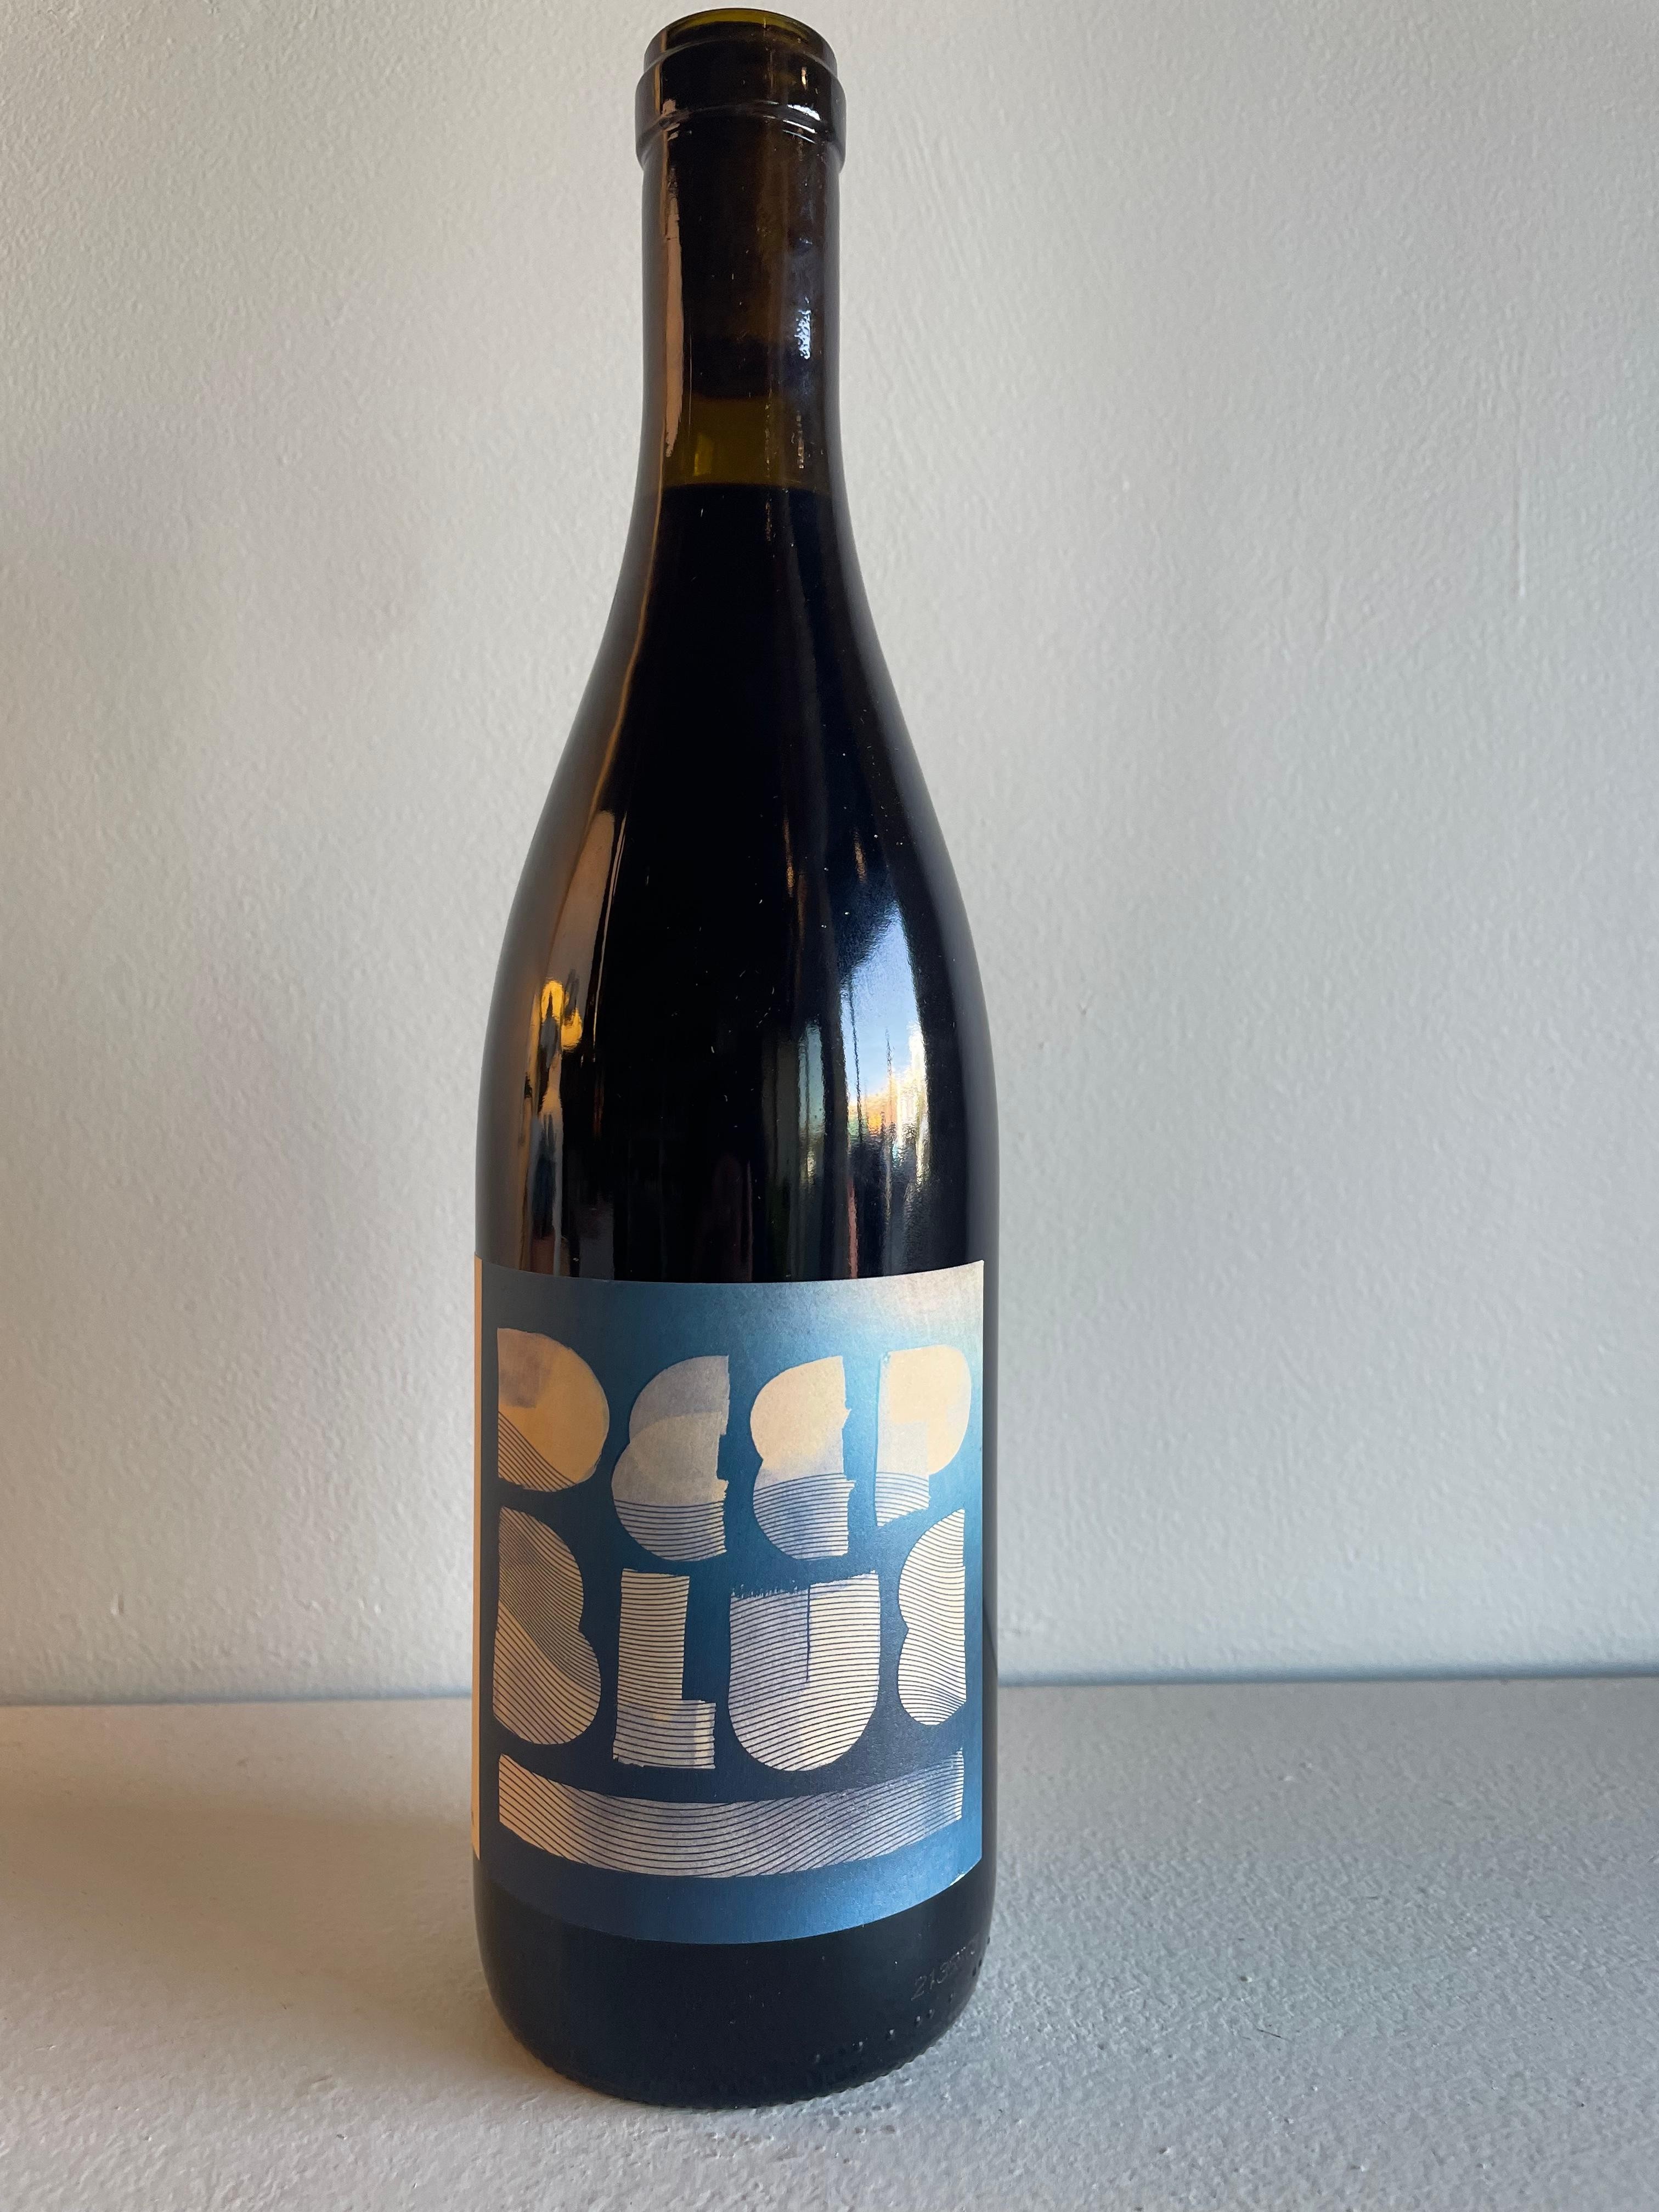 2021 Pinot Noir "Deep Blue", Day Wines, Willamette, OR